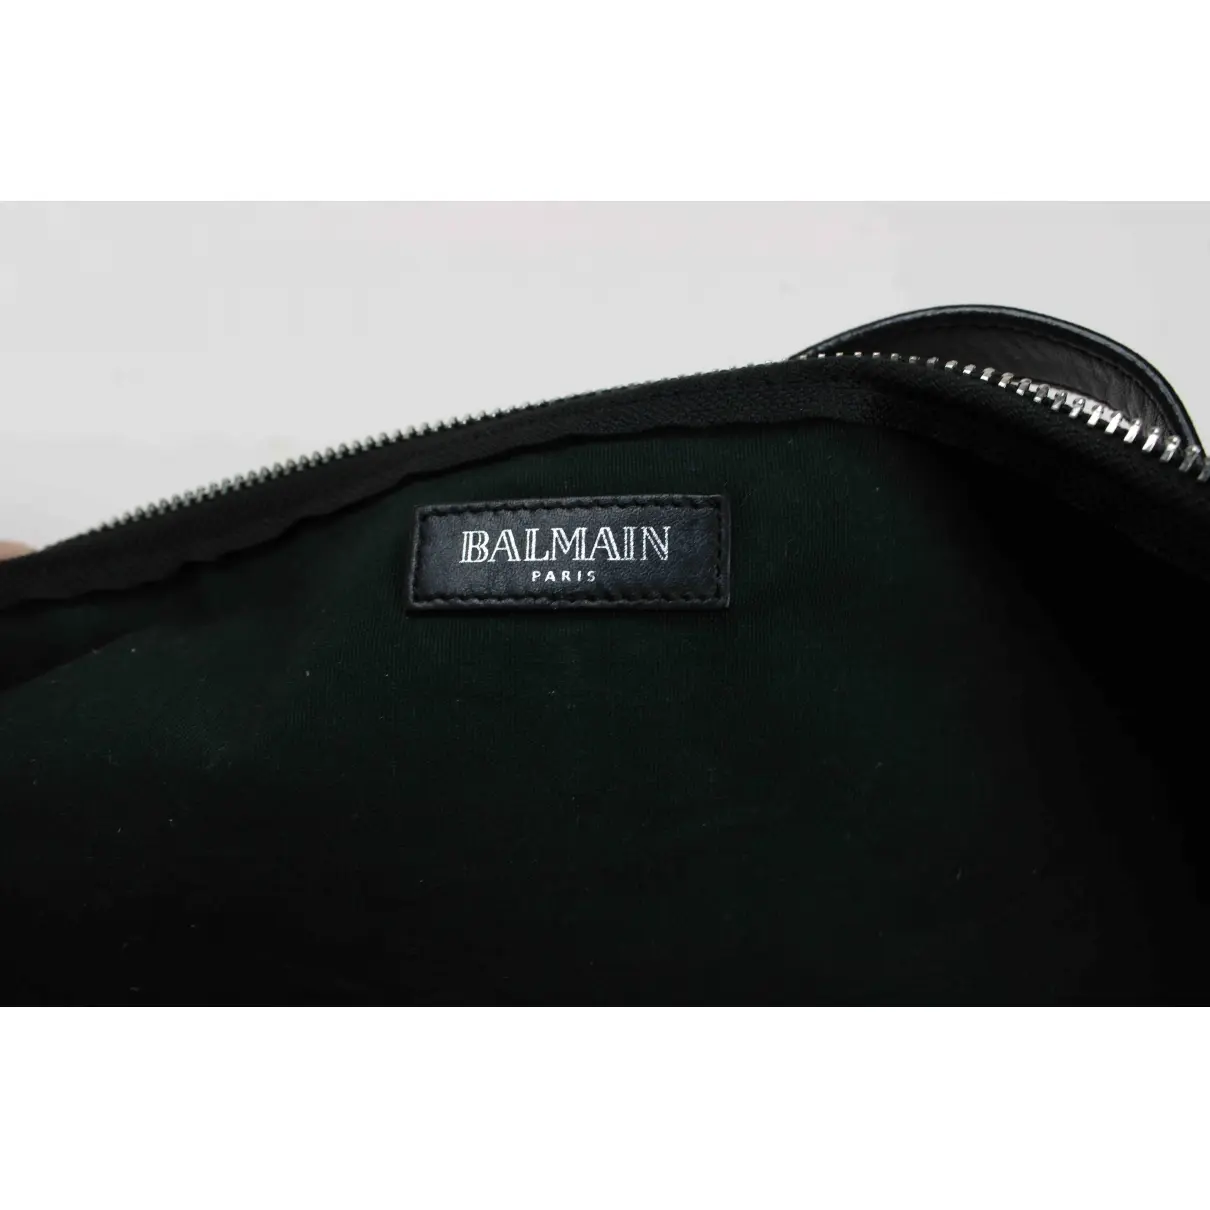 Leather weekend bag Balmain